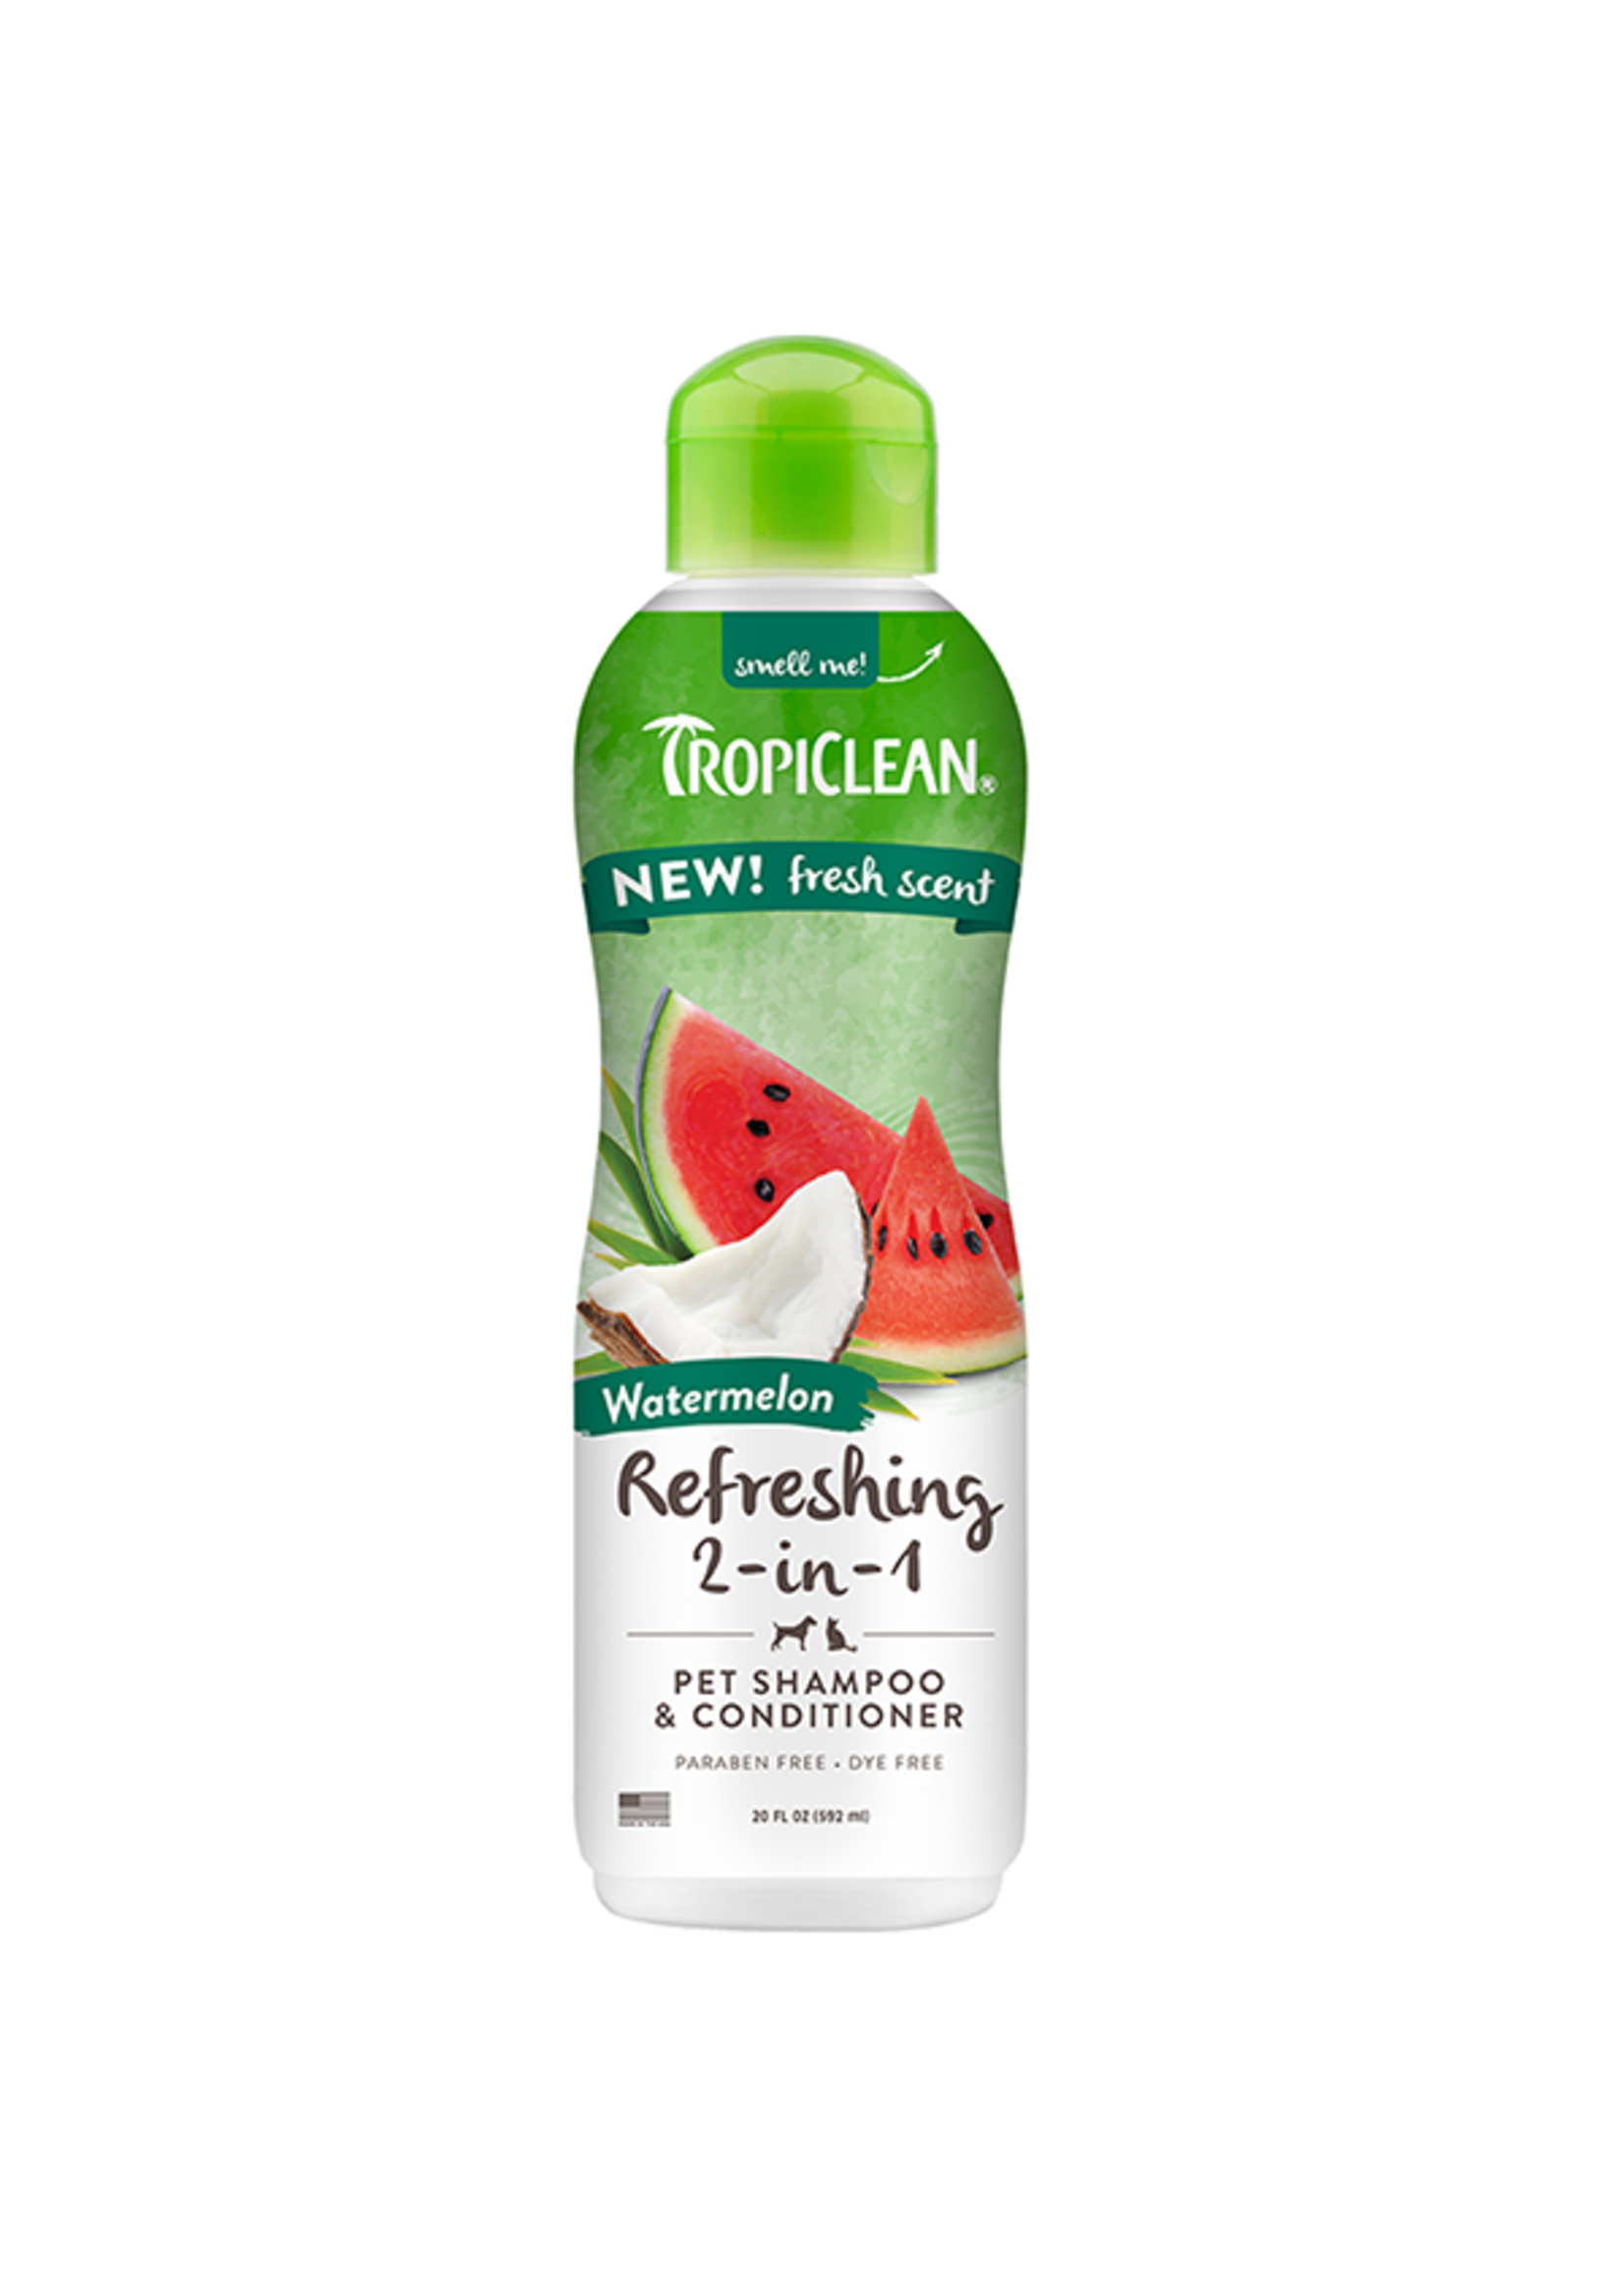 Tropiclean TropiClean - 2-in-1 Shampoo & Conditioner Watermelon 20 oz